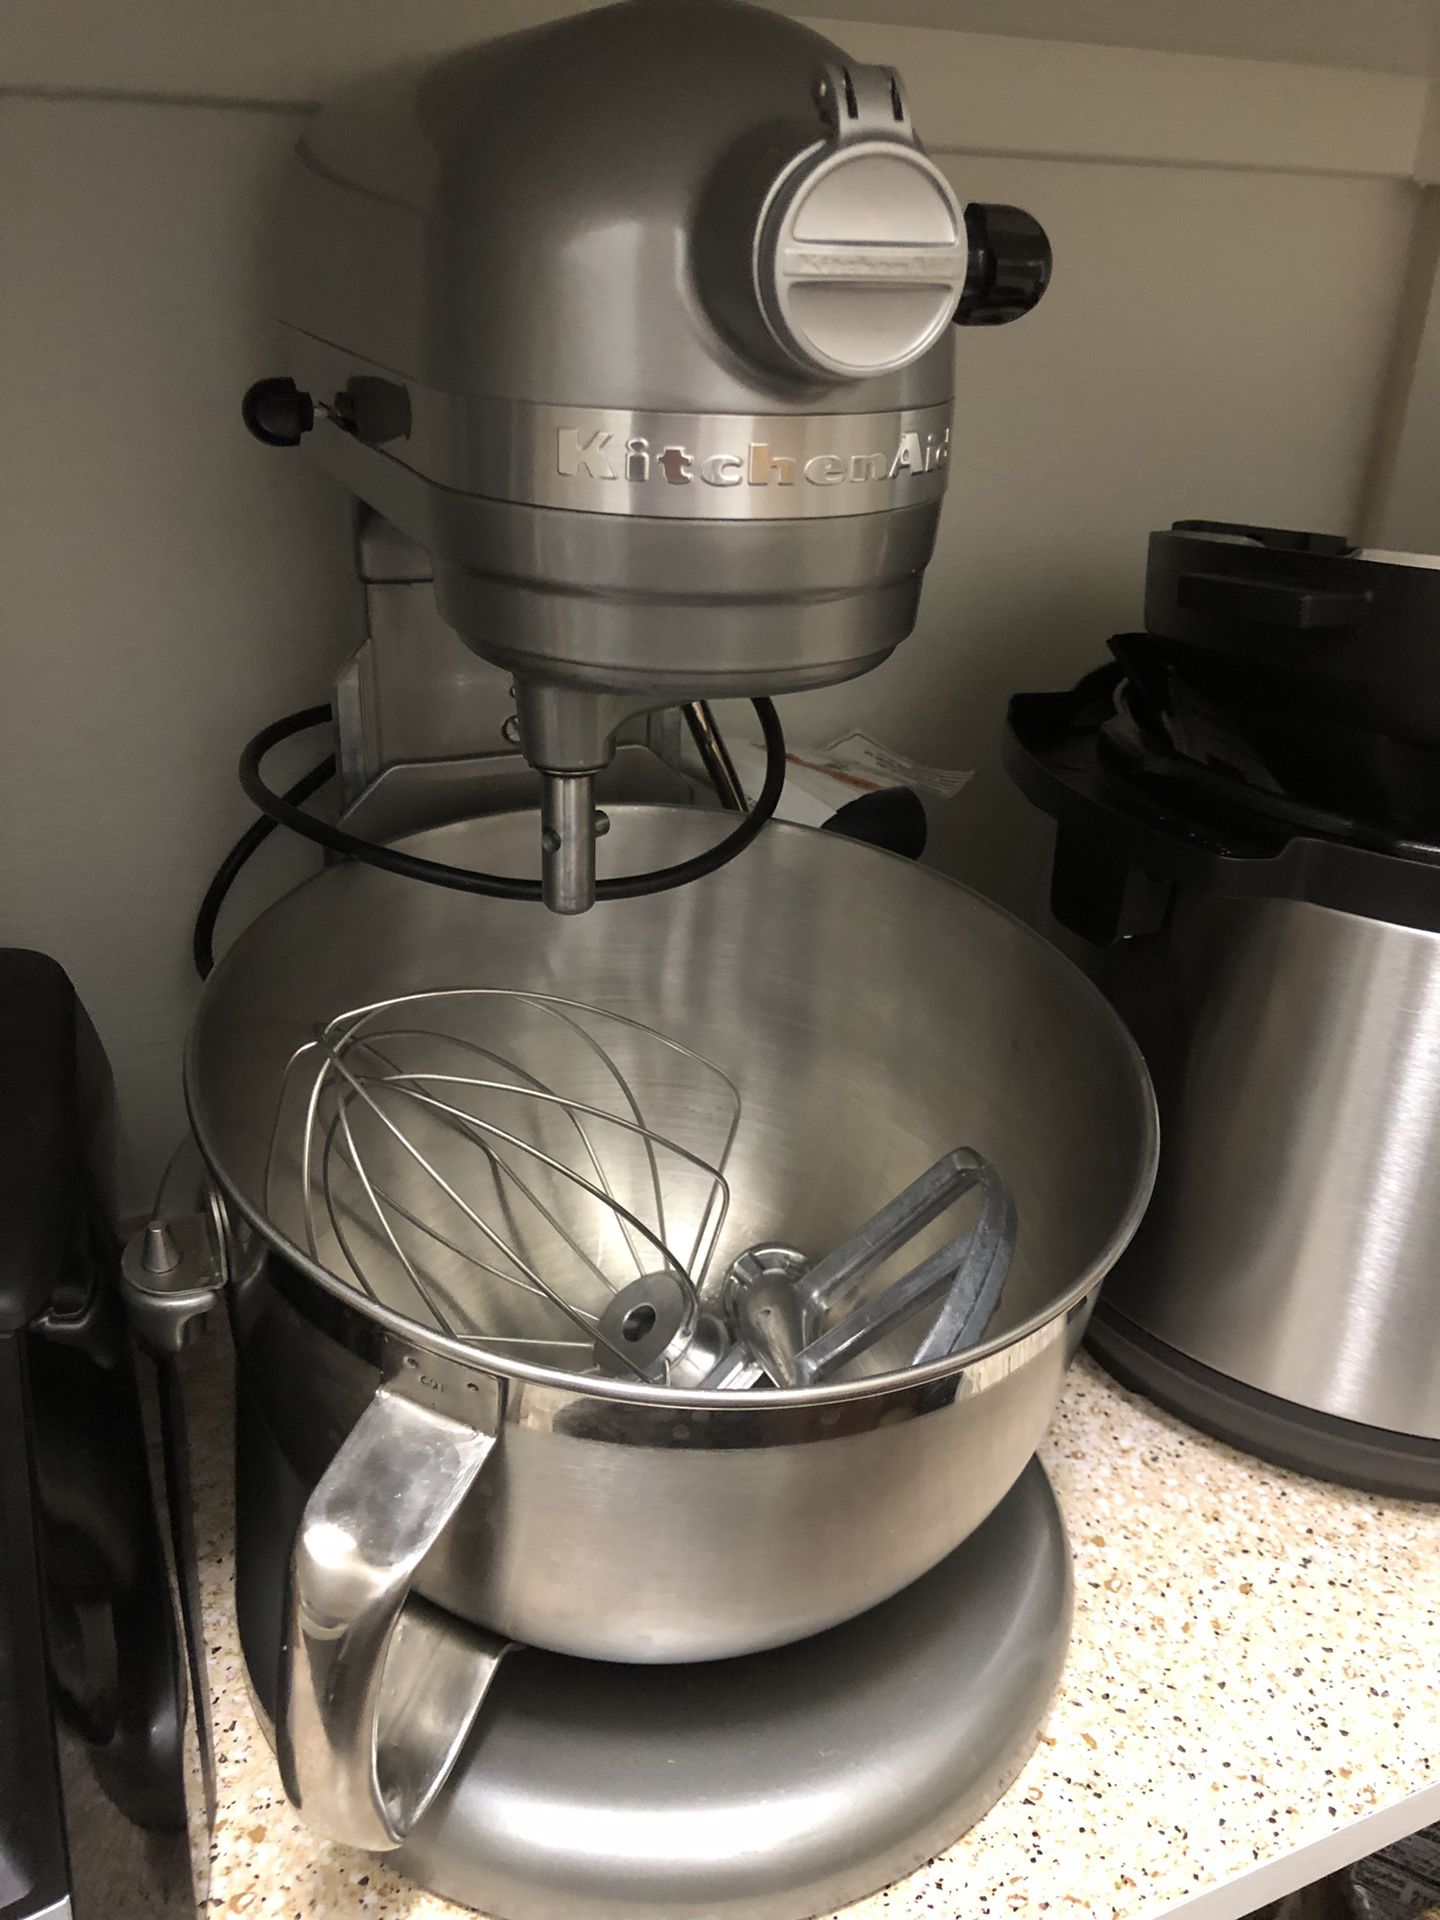 6 quart kitchen aid mixer